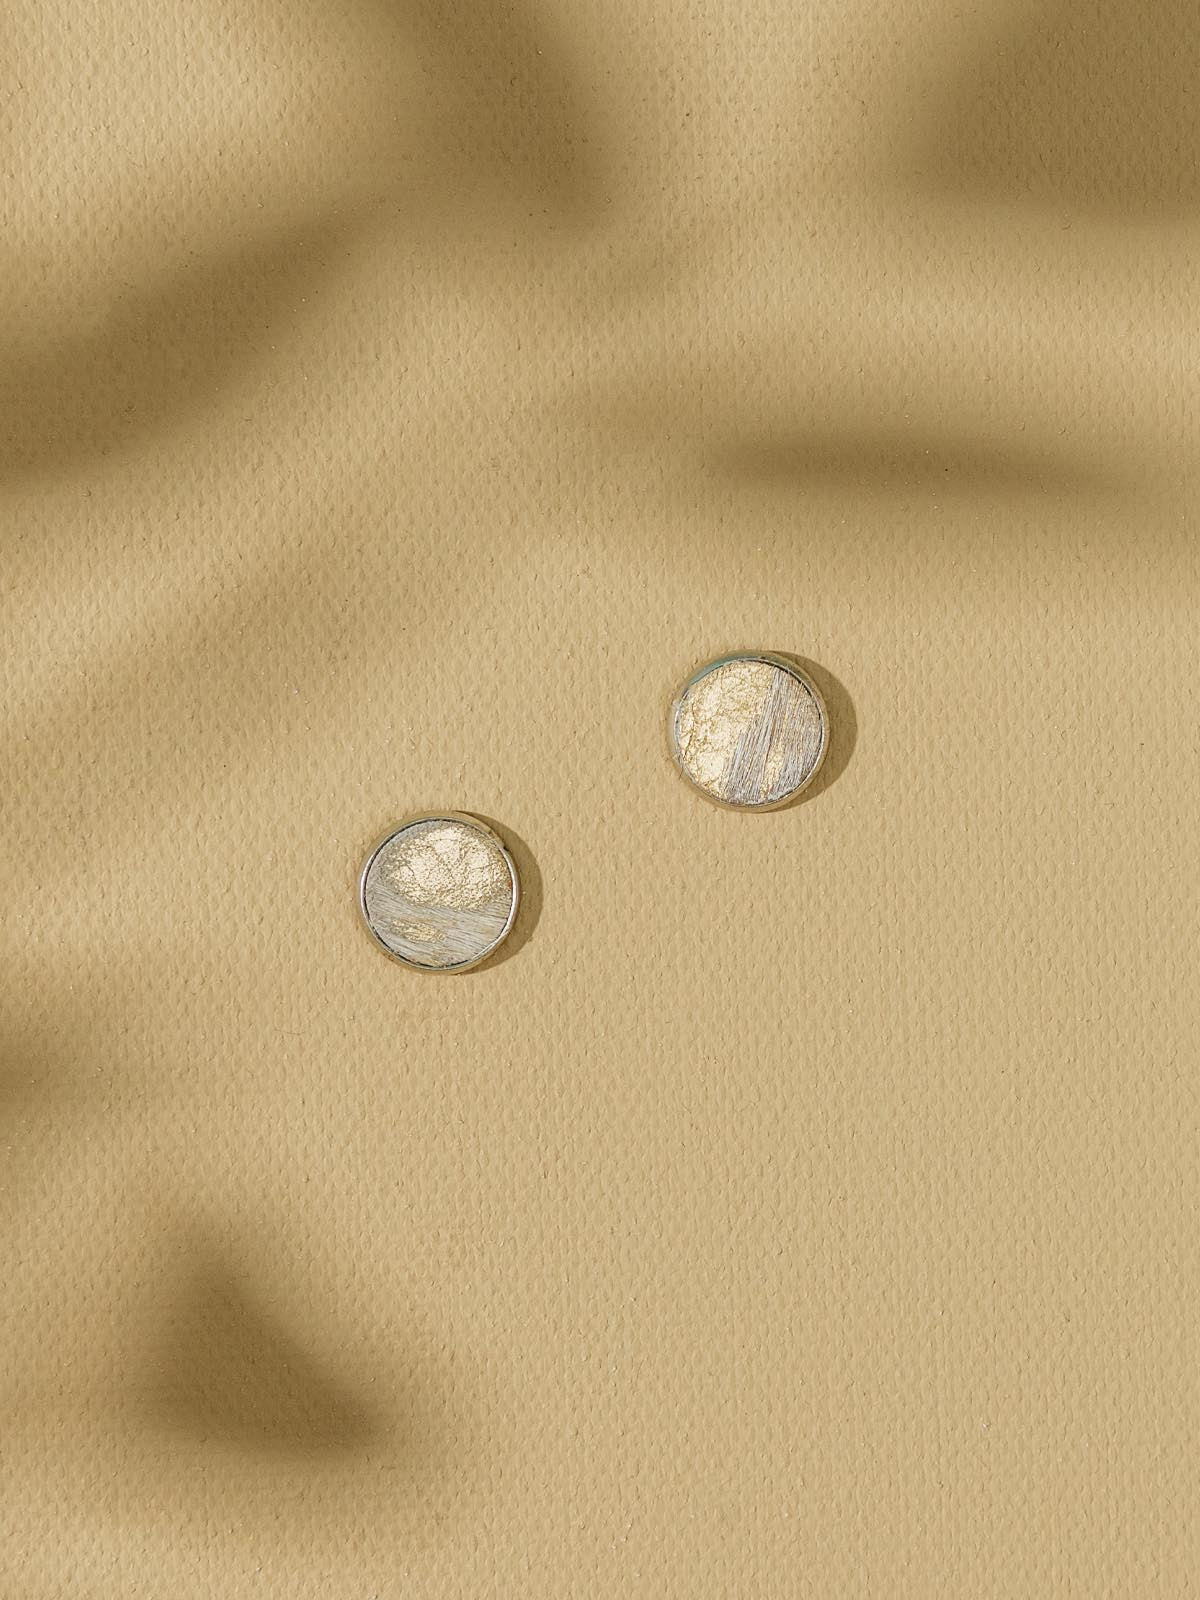 Three stud earrings on beige background